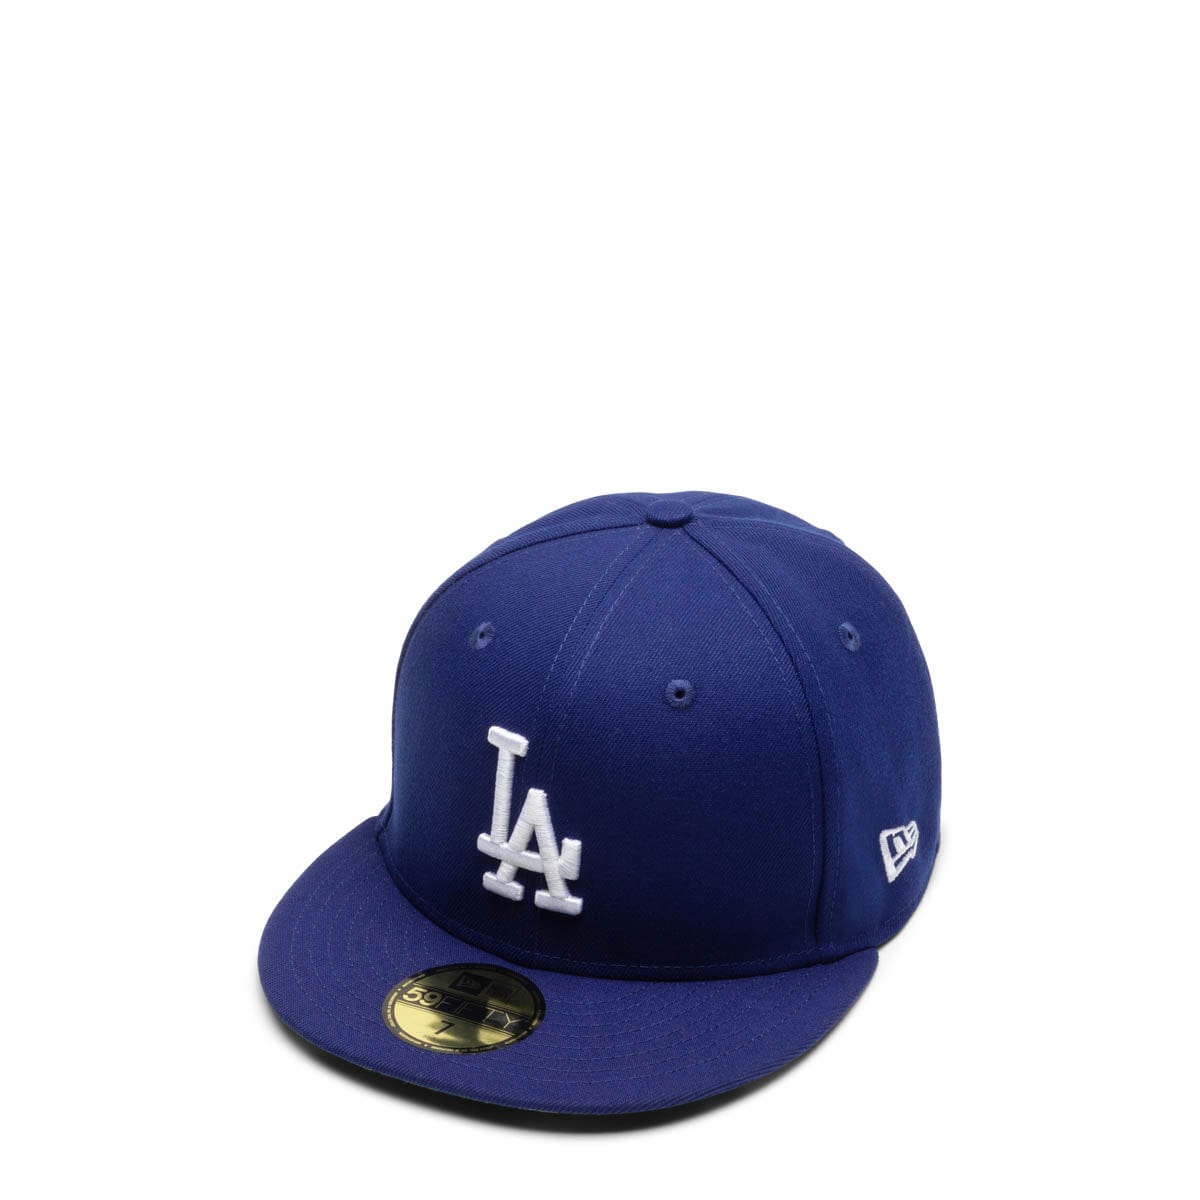 New Era Fitted La Dodgers Cream/Royal Blue 7 3/4